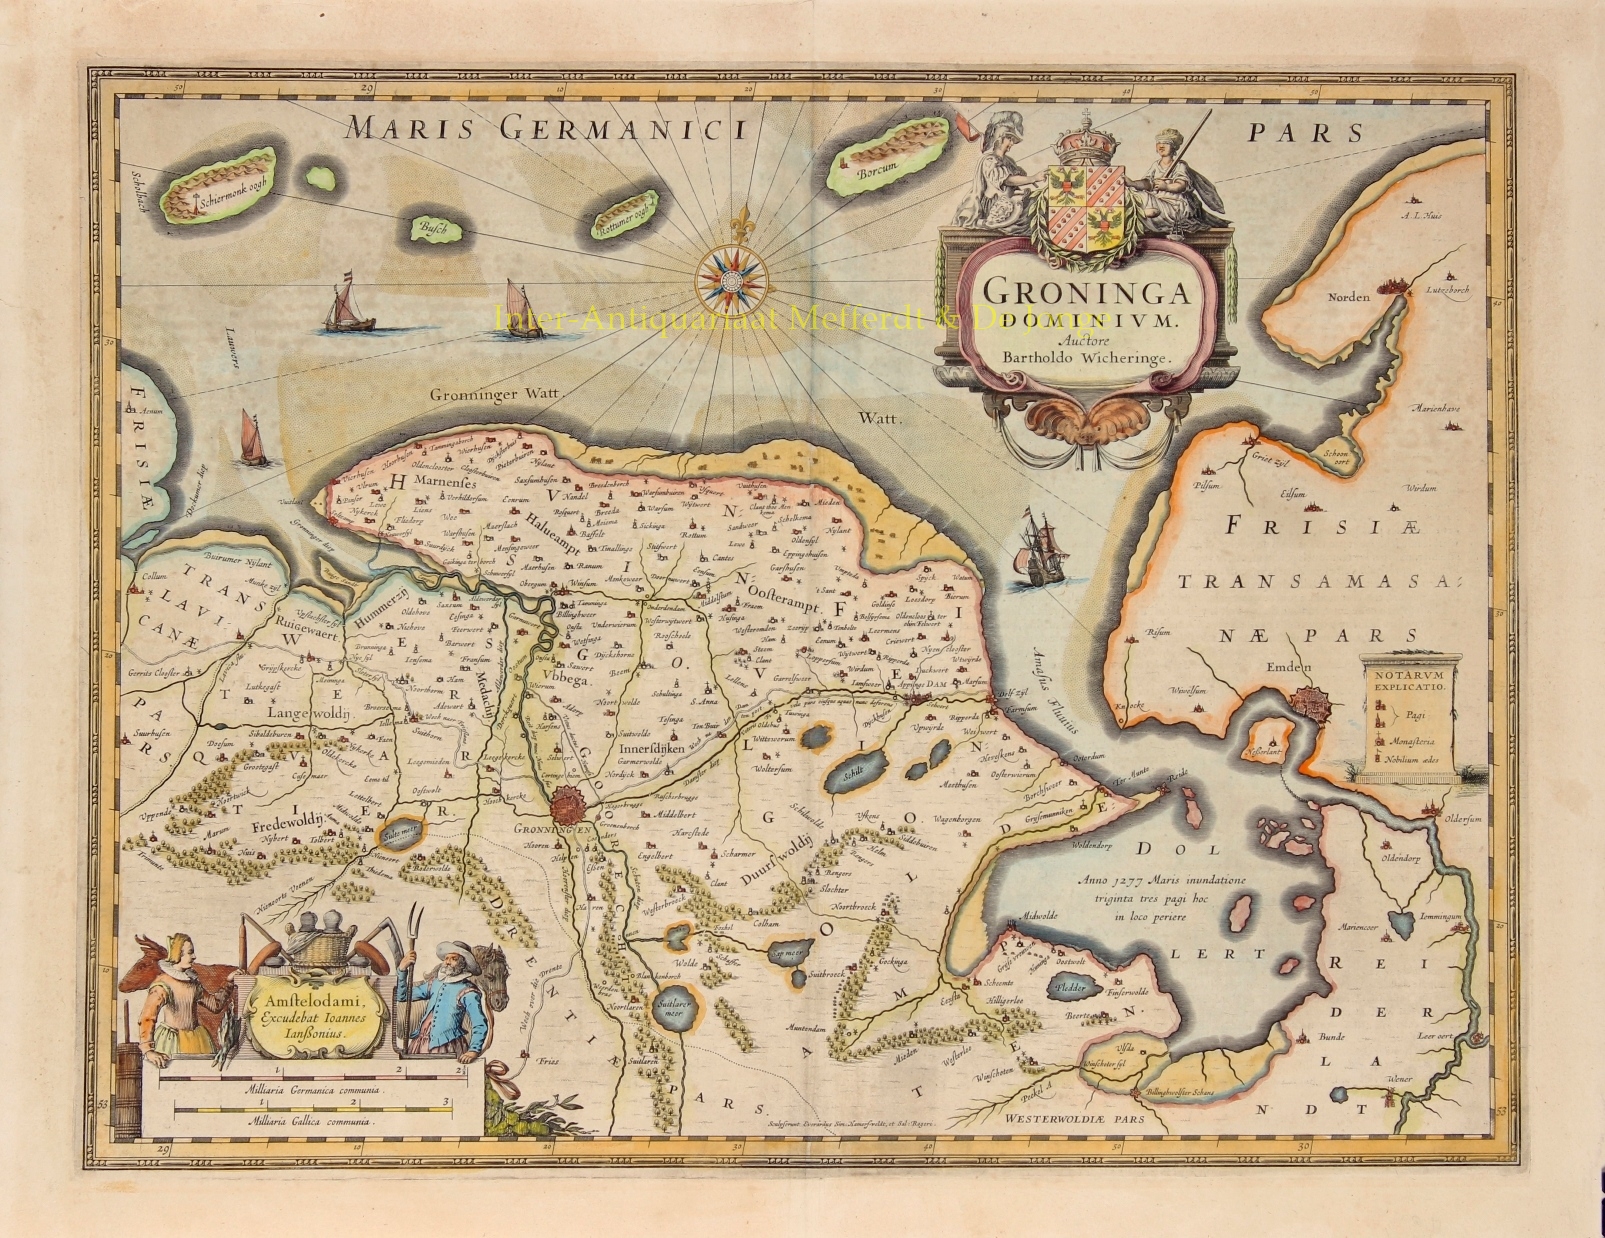 Janssonius-- Johannes - Groningen en Ommelanden - Johannes Janssonius, 1633